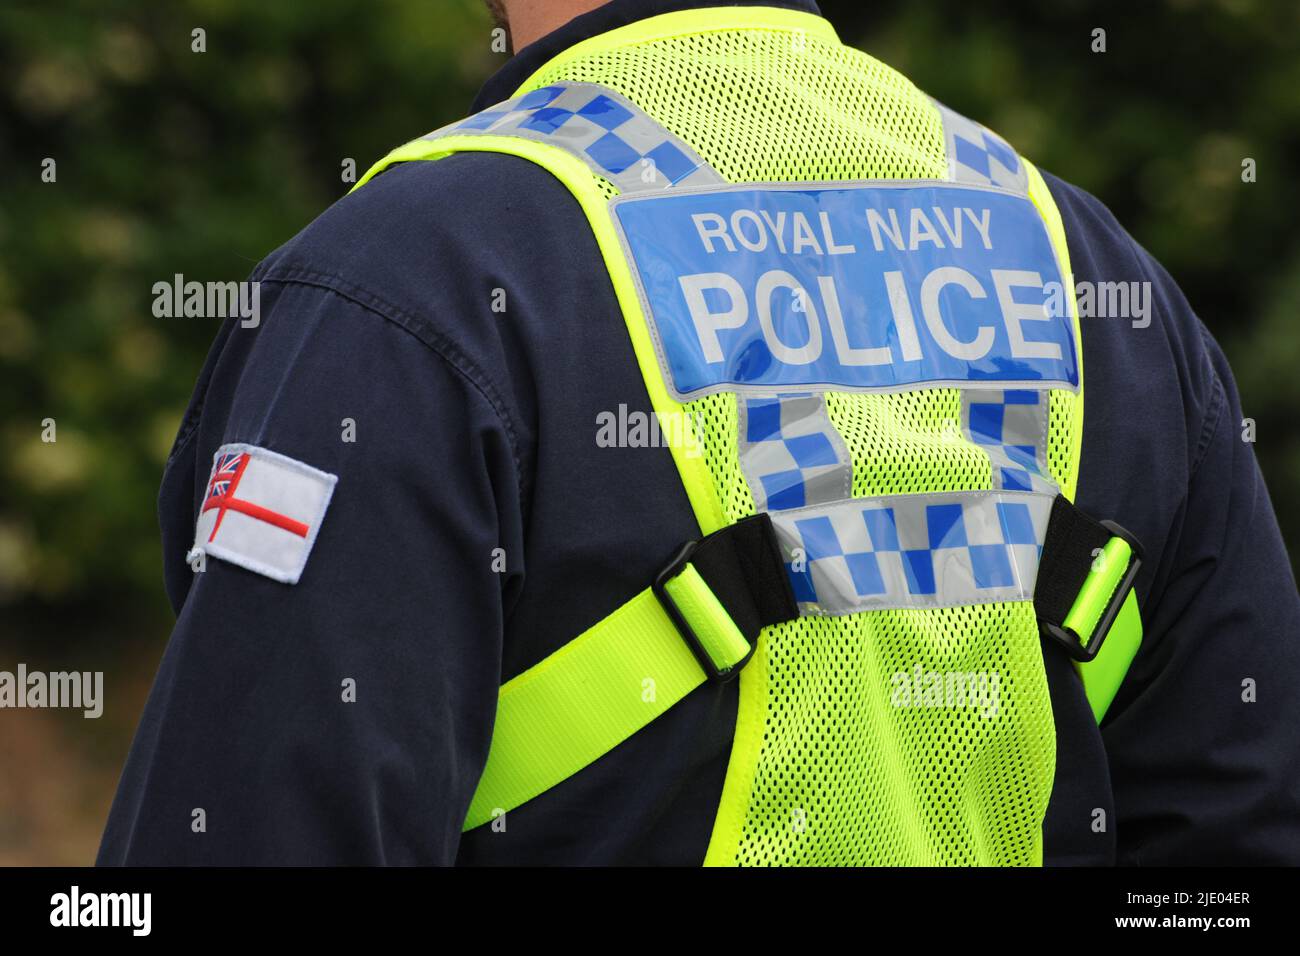 Royal Navy police regulator Stock Photo